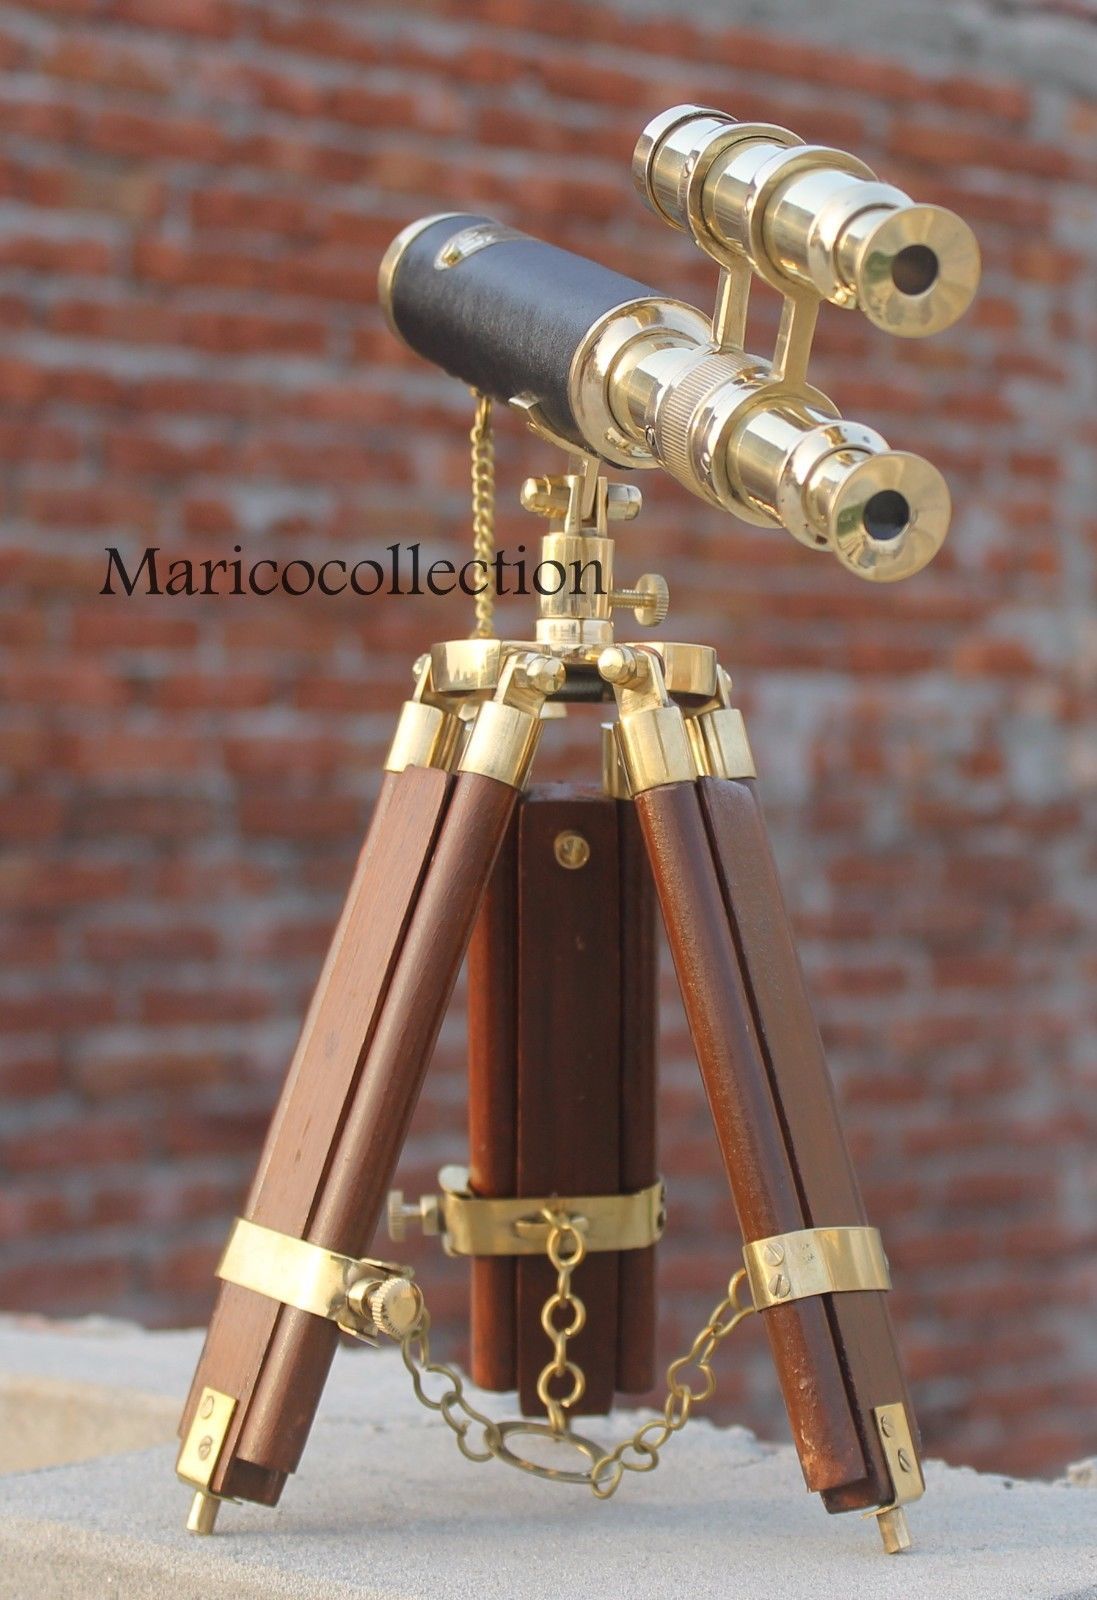 pirate telescope